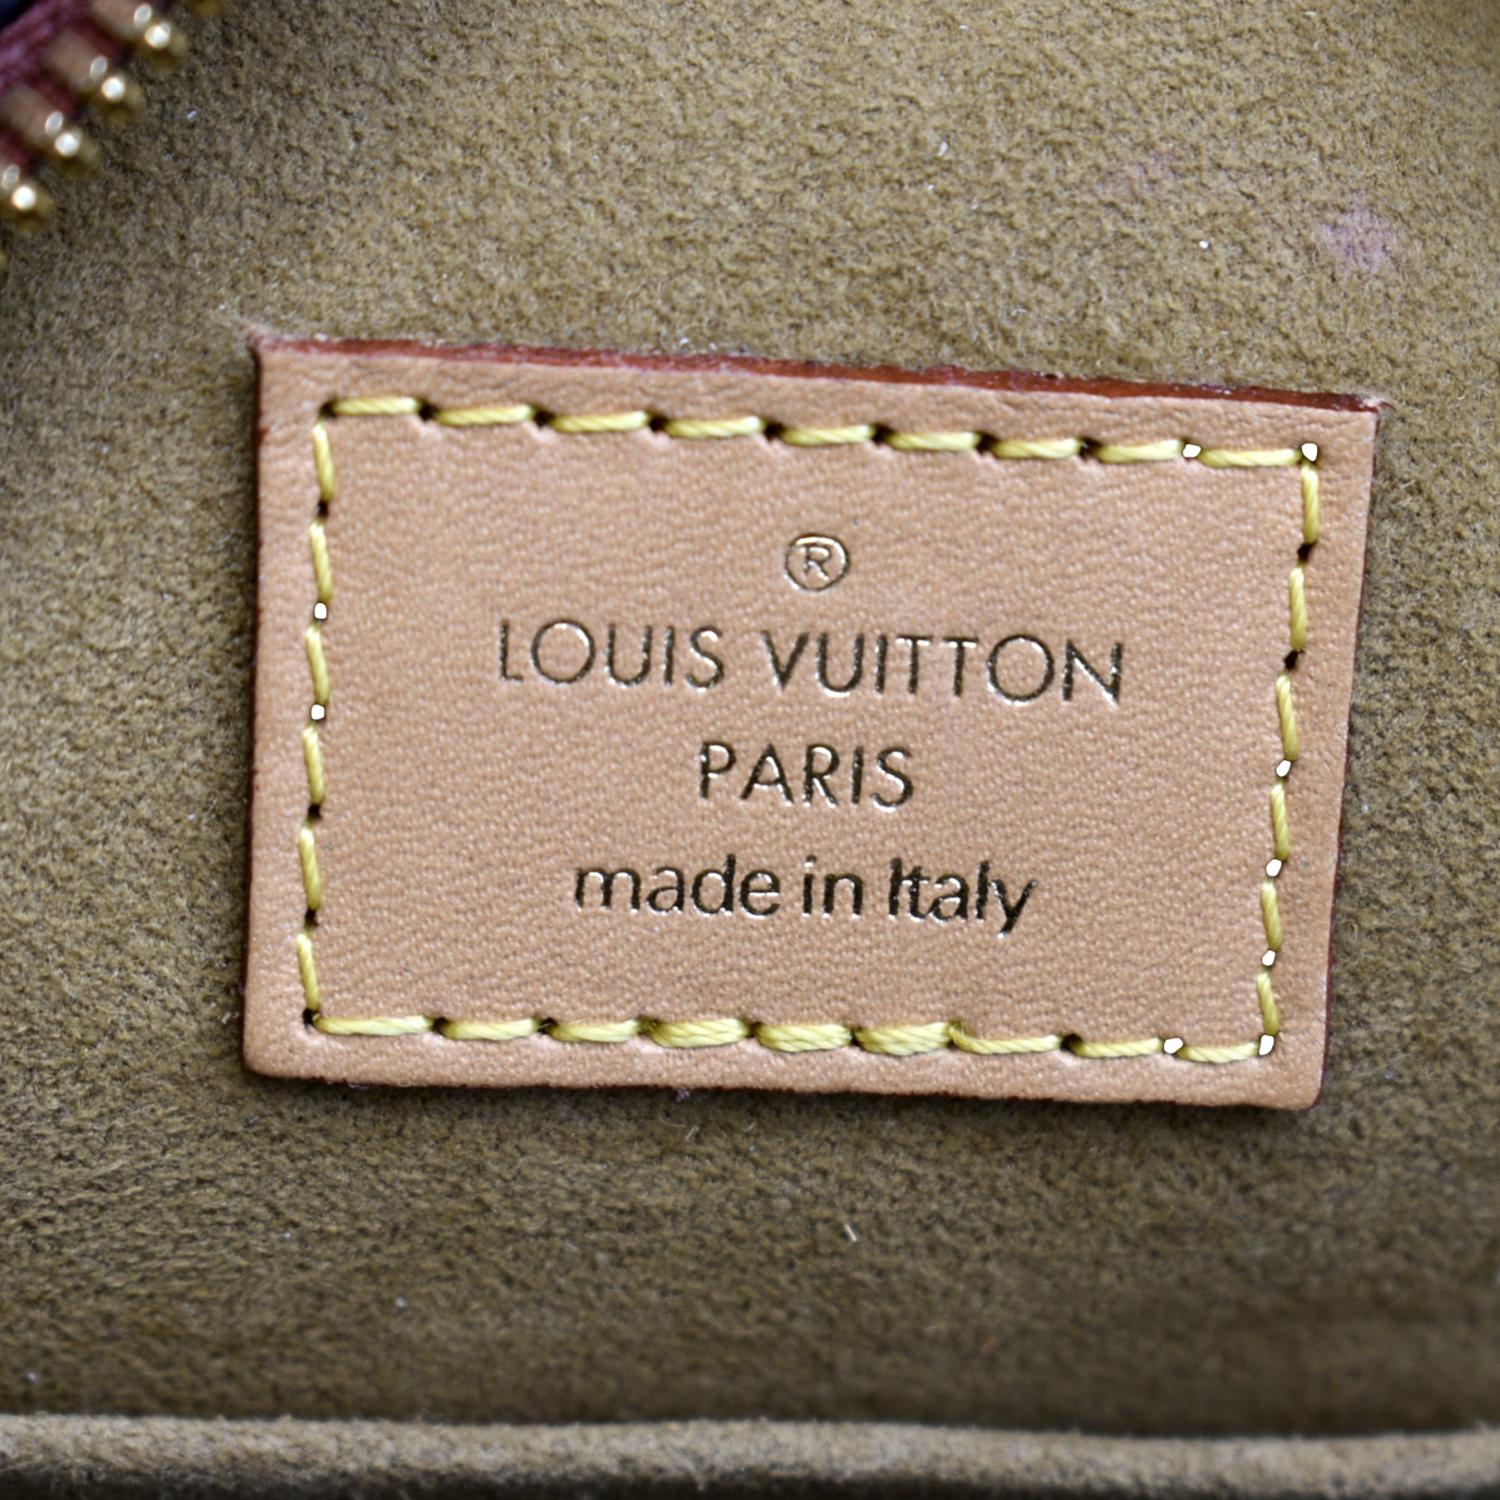 Louis Vuitton Boite Chapeau Souple mm 2023-24FW, Brown